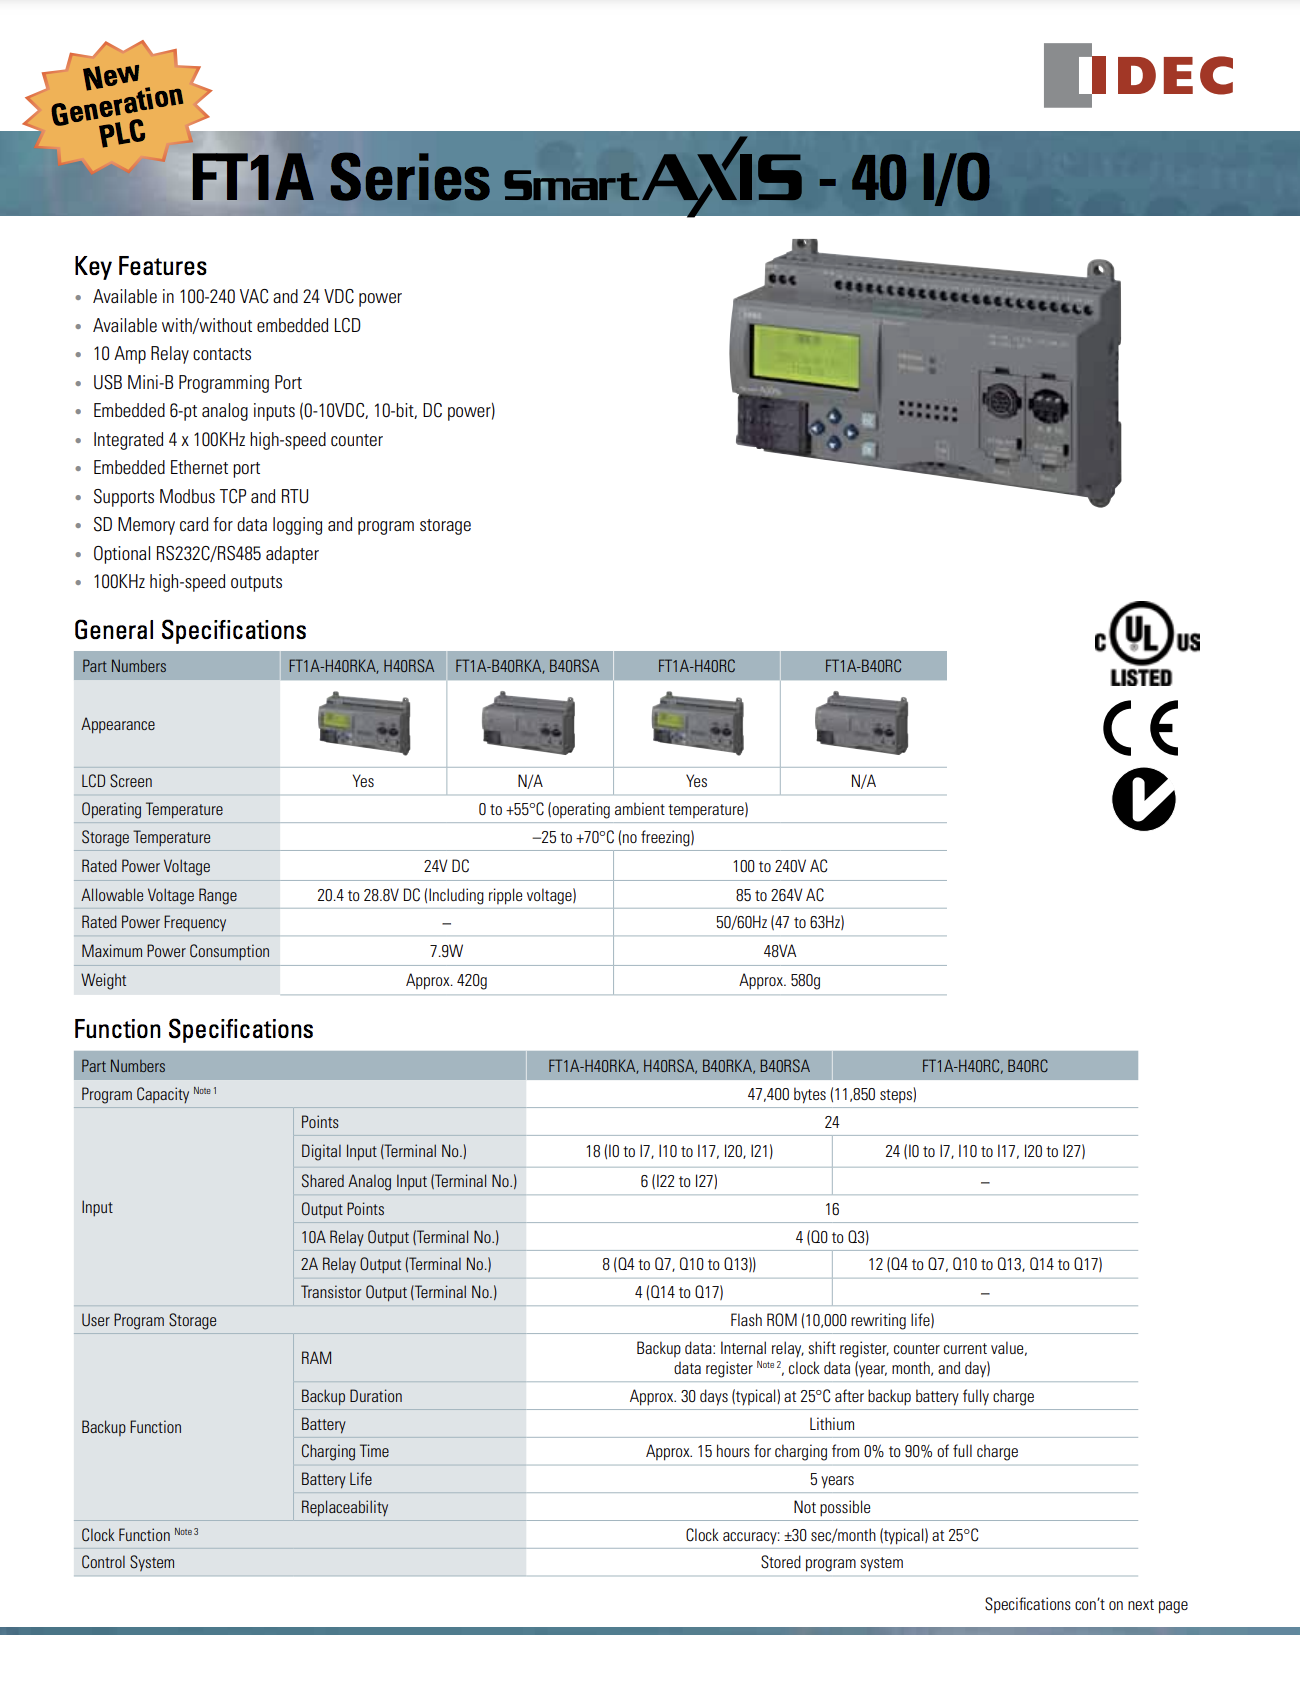 IDEC FT1A SmartAXIS 40IO CPU Datasheet